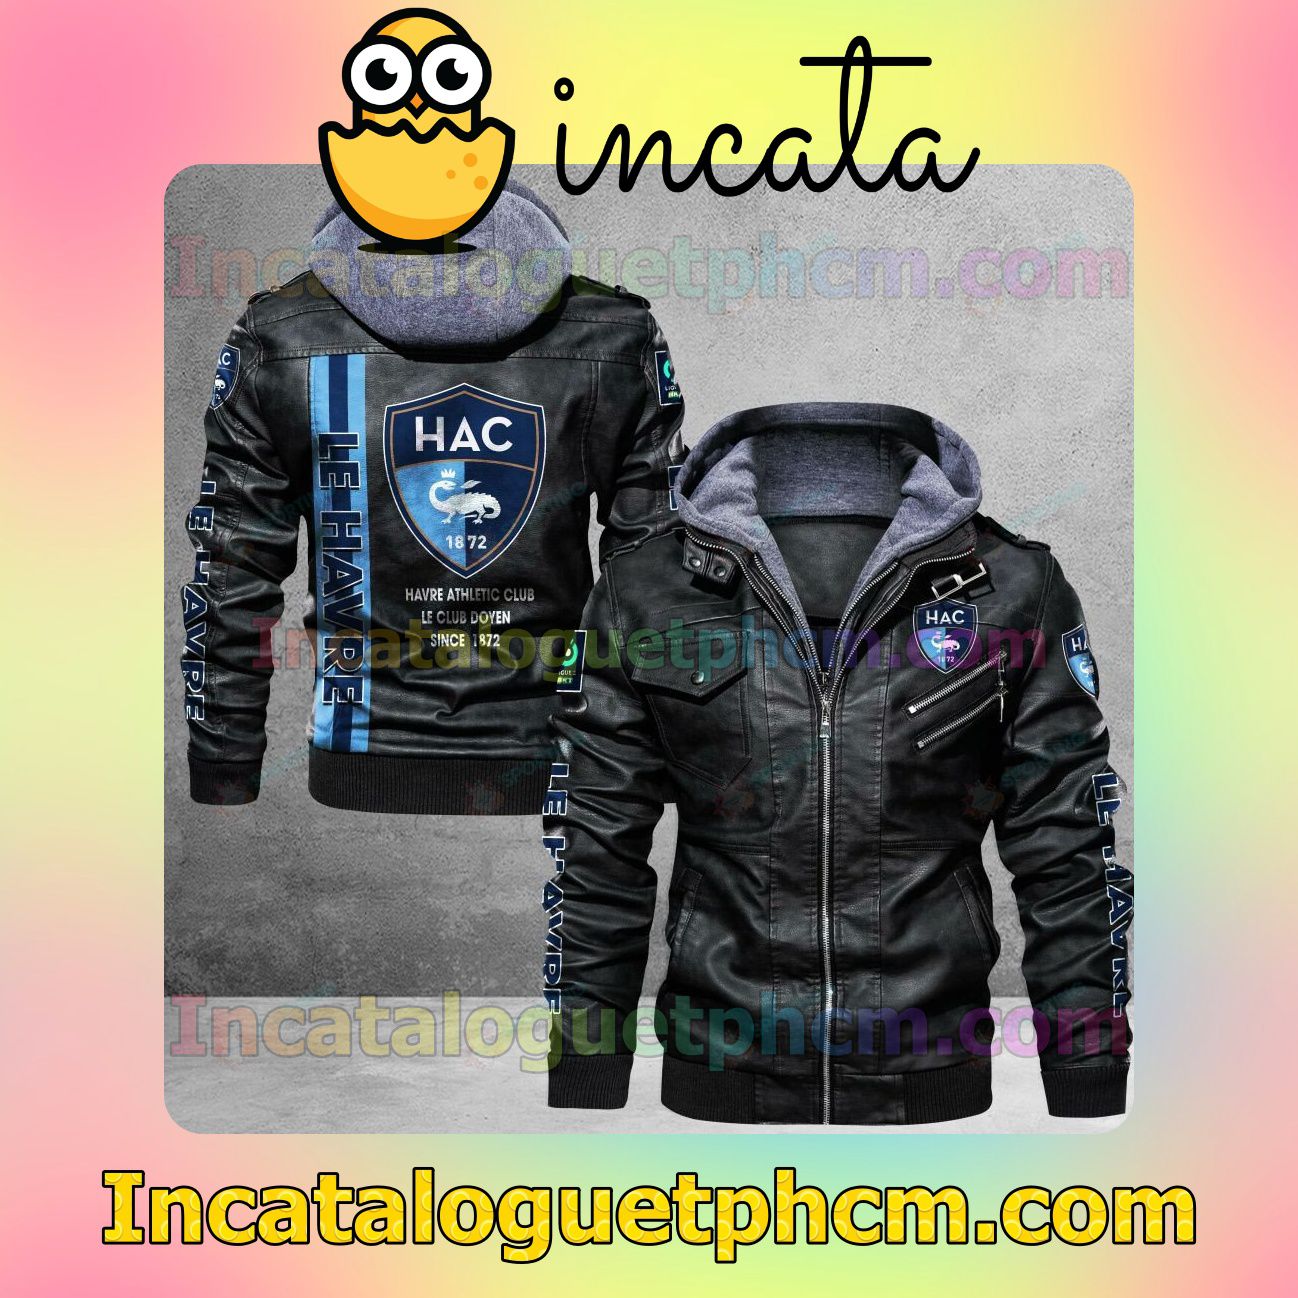 Havre Athletic Club Brand Uniform Leather Jacket